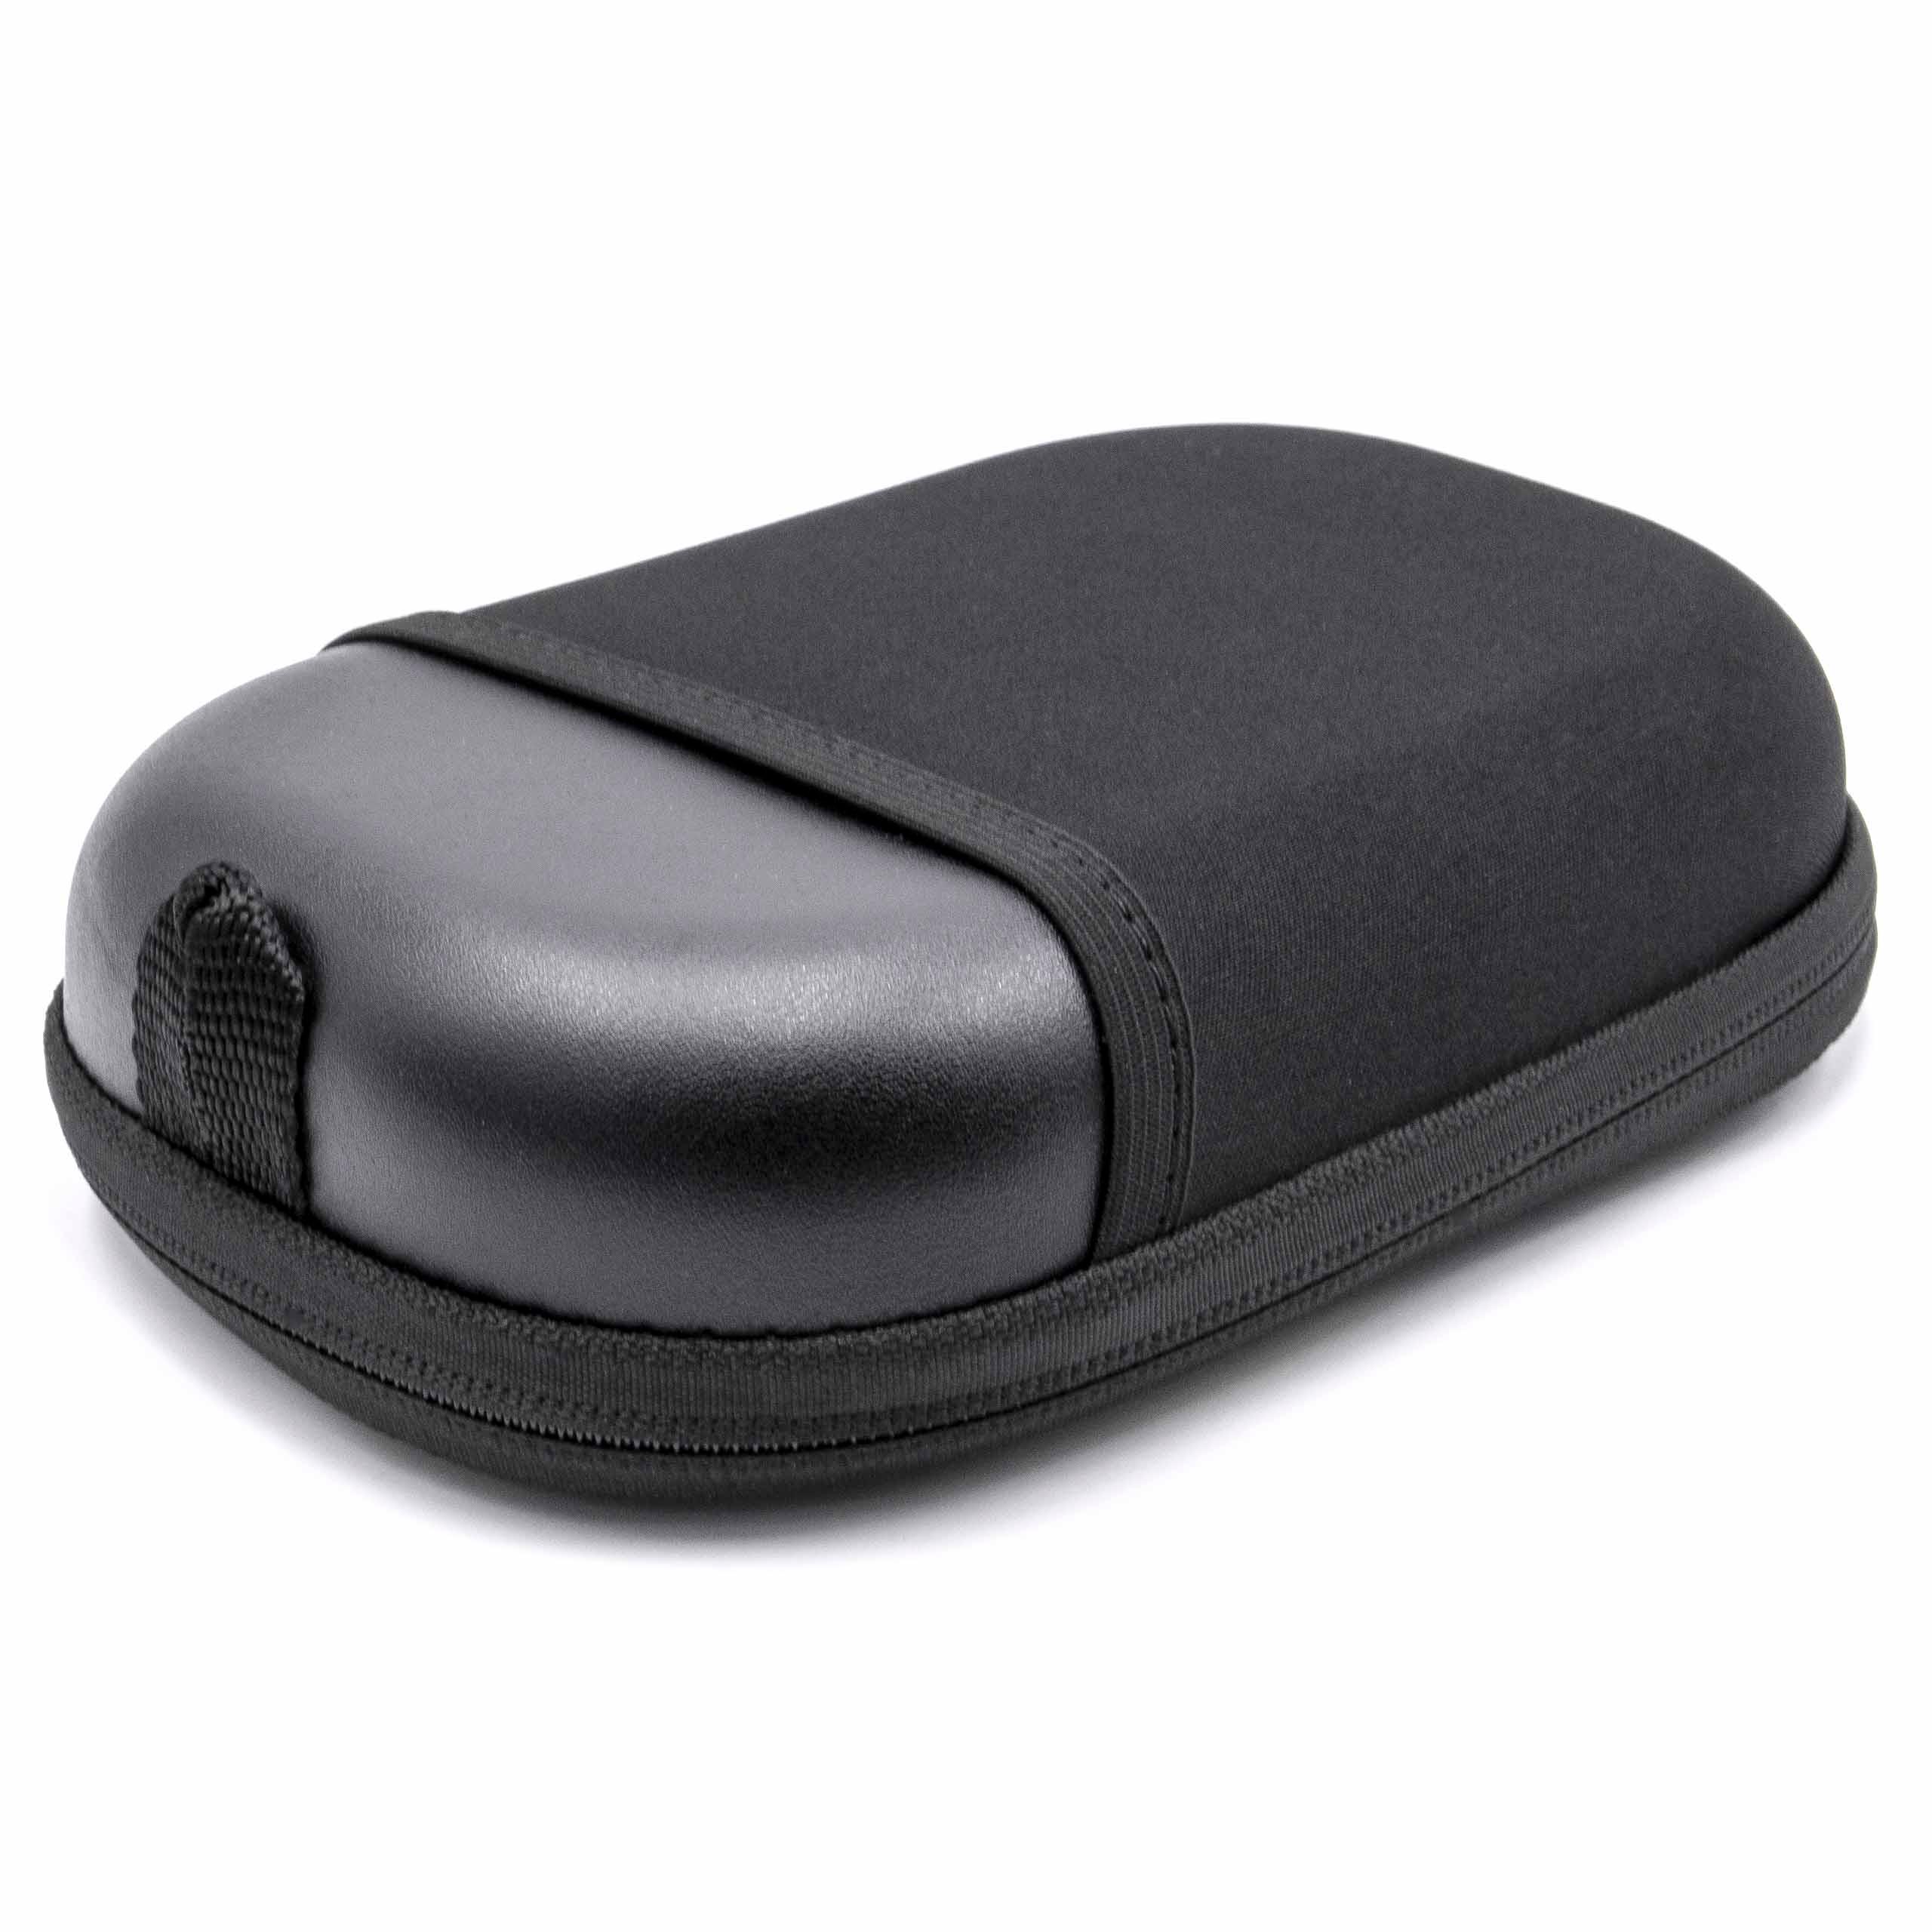 Transport Case suitable for Bose QuietComfort Headphones, Headset - Bag, ethylene vinyl acetate (EVA)